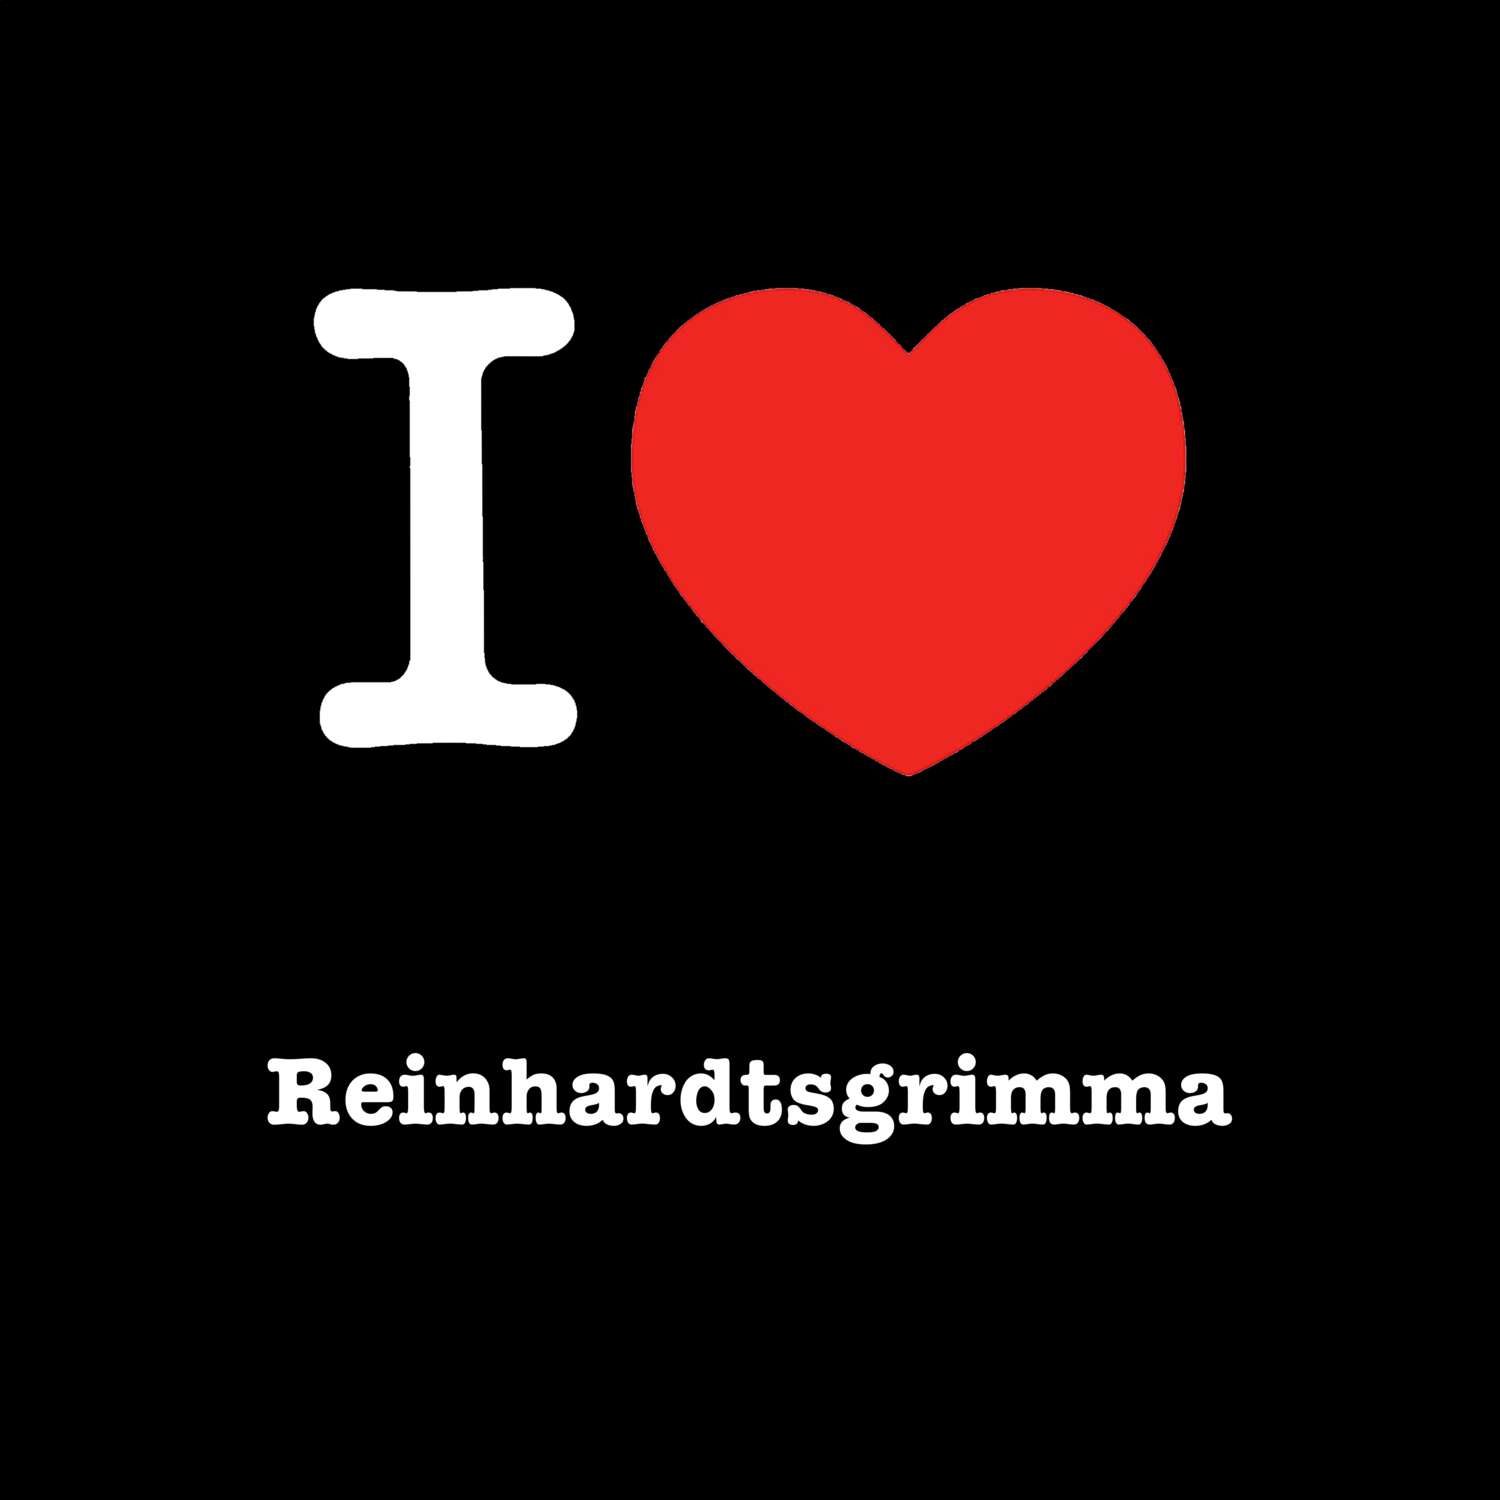 Reinhardtsgrimma T-Shirt »I love«